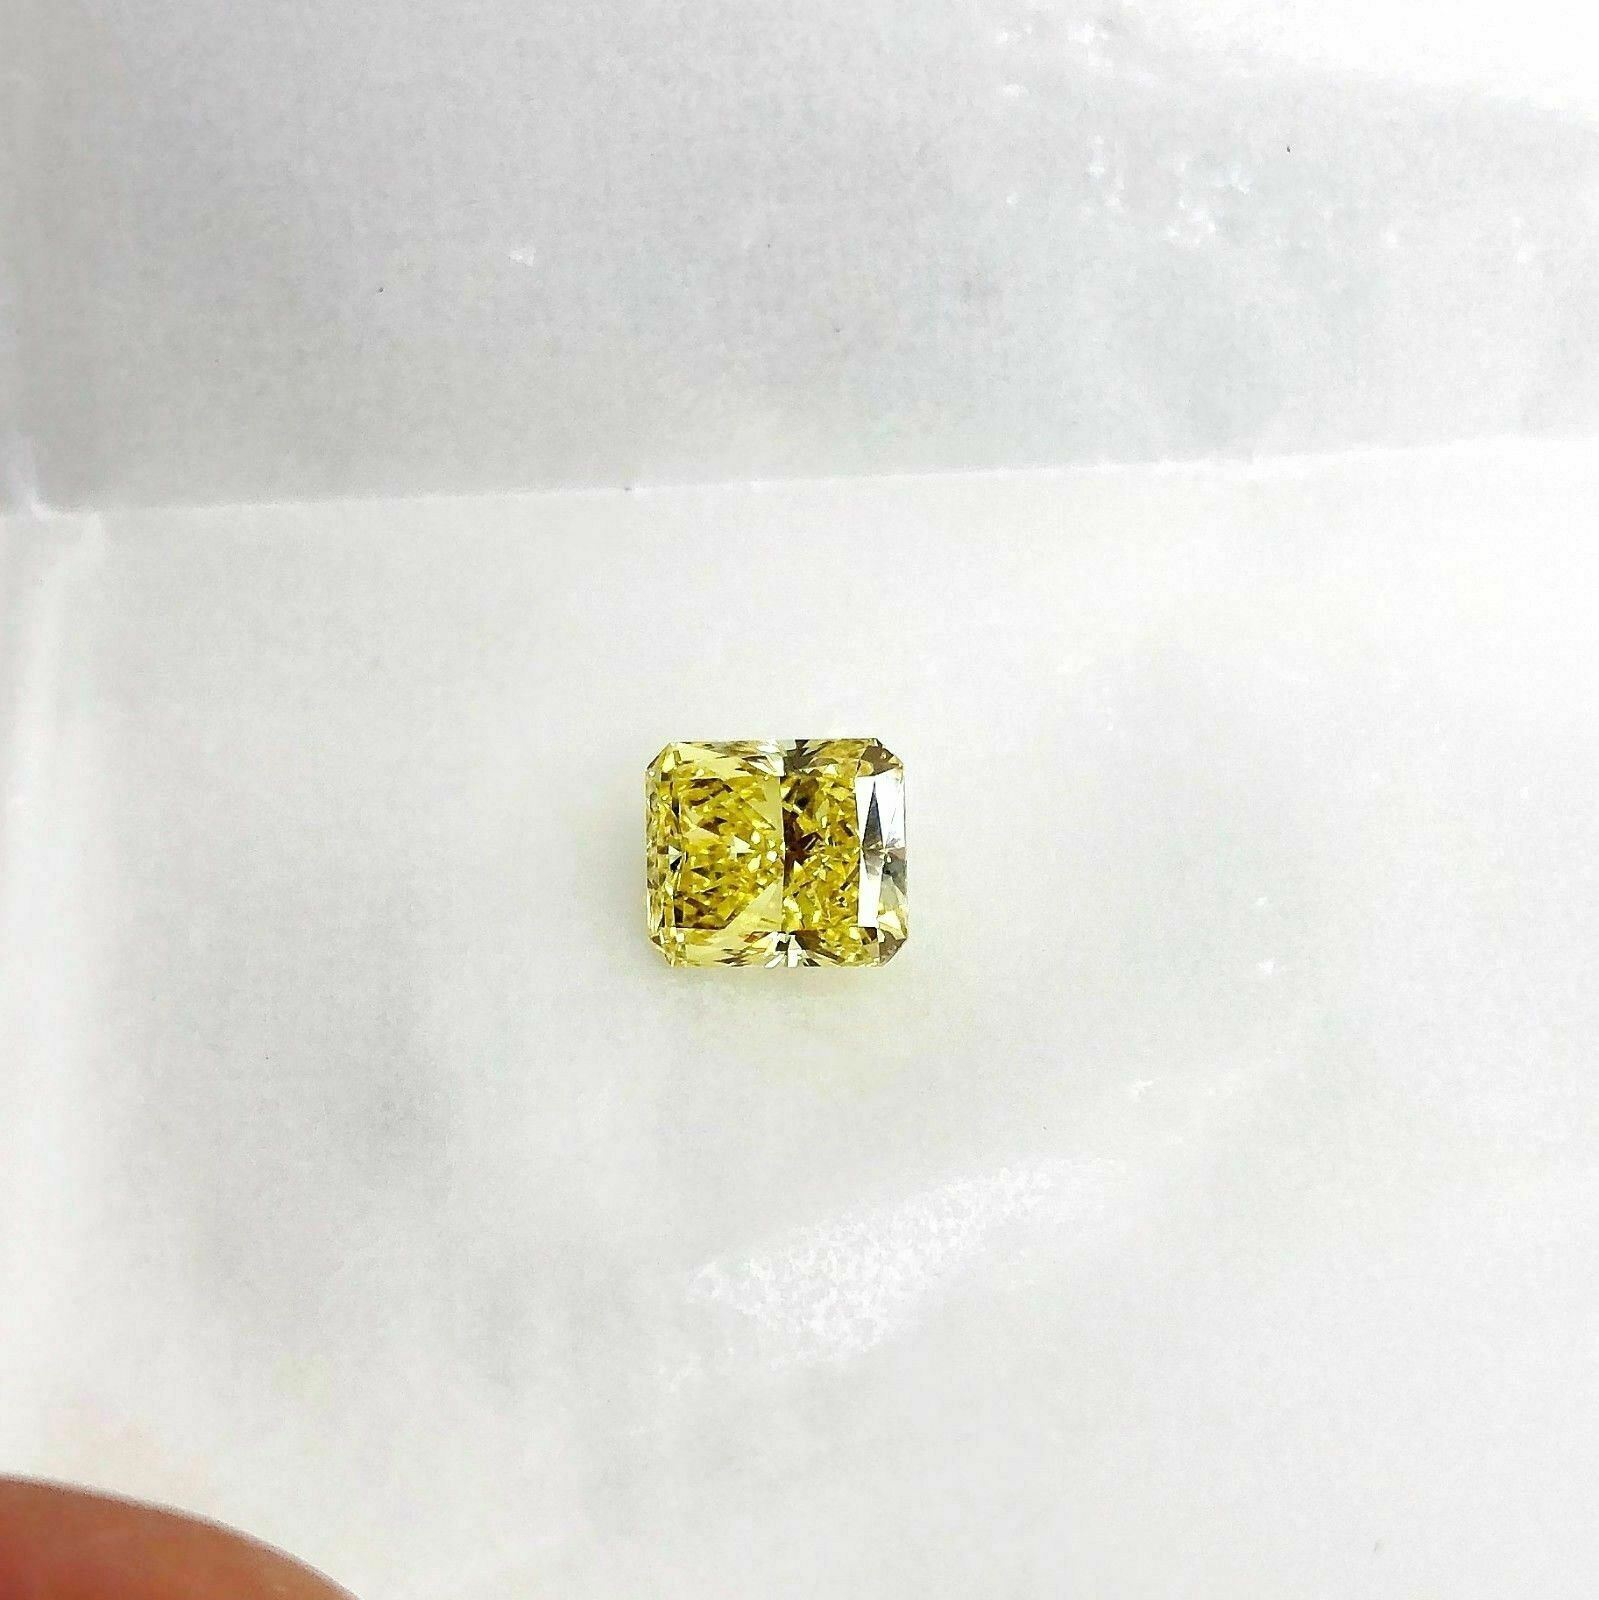 Loose GIA Diamond - Fancy Vivid Yellow GIA Radiant Cut 2.04 Carats Diamond SI1